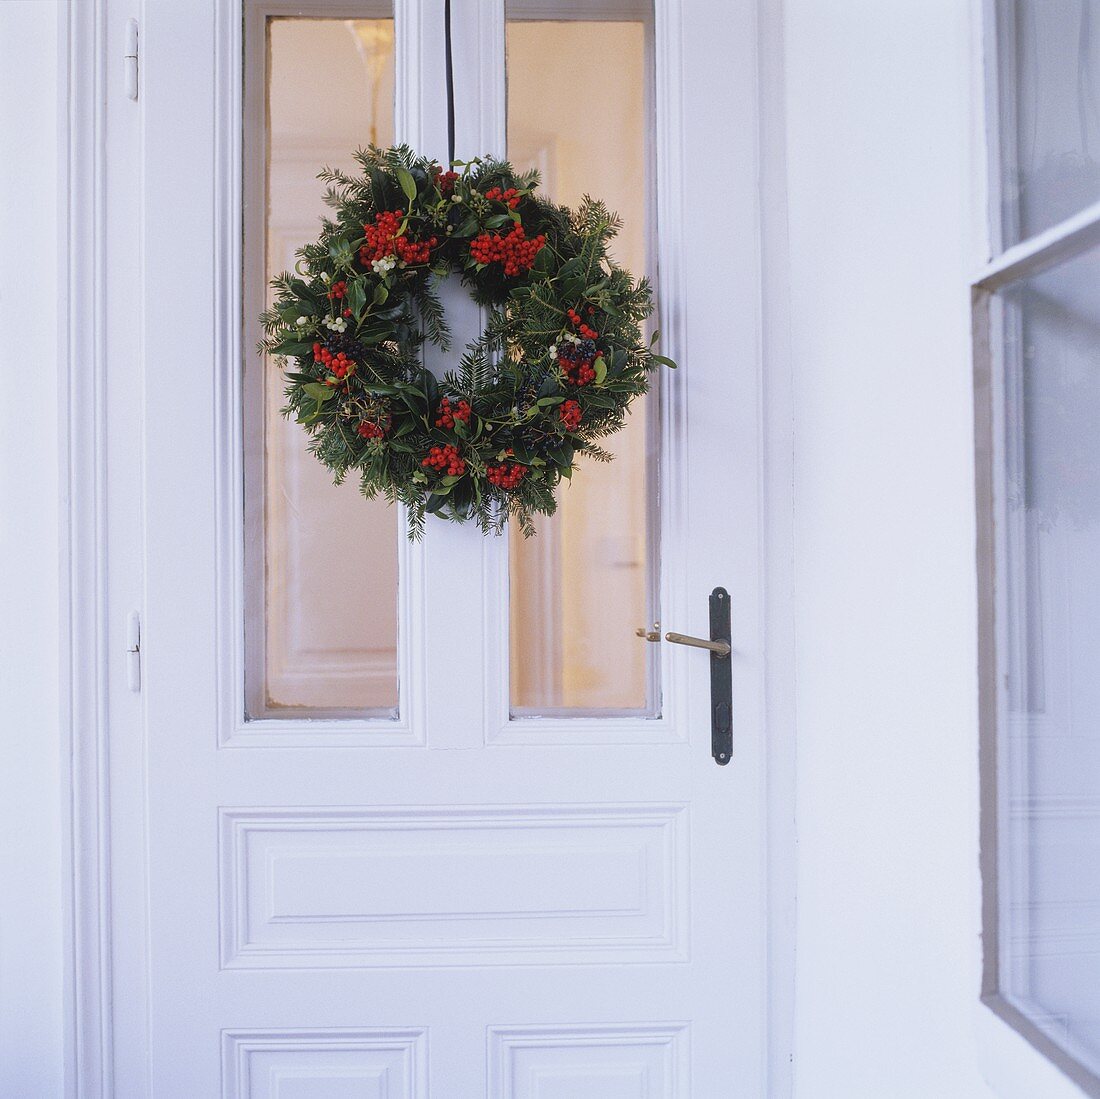 Entrance door with Christmas wreath